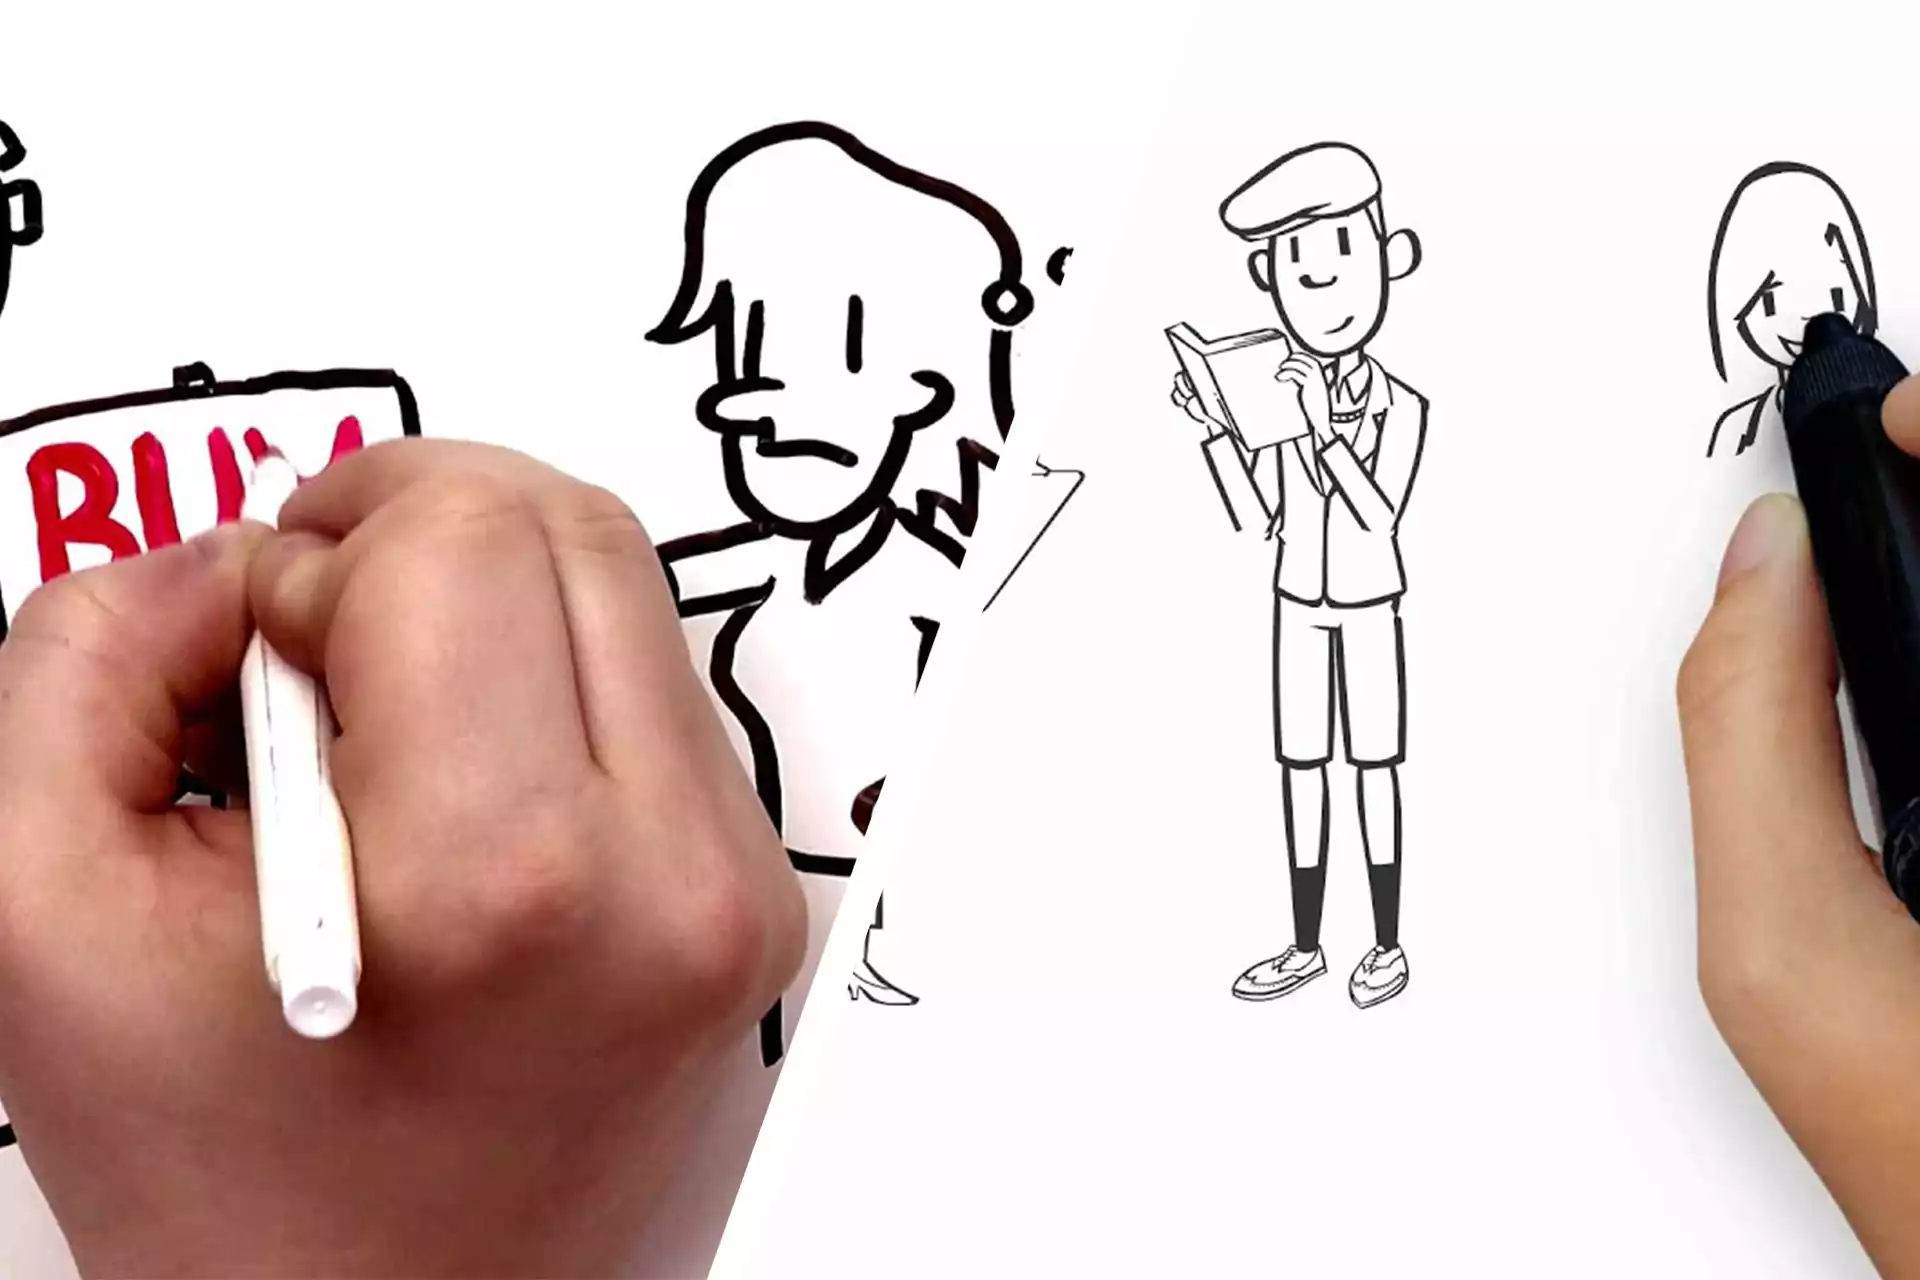 How to Make Whiteboard Animated Video (2020) | Make a Video Hub